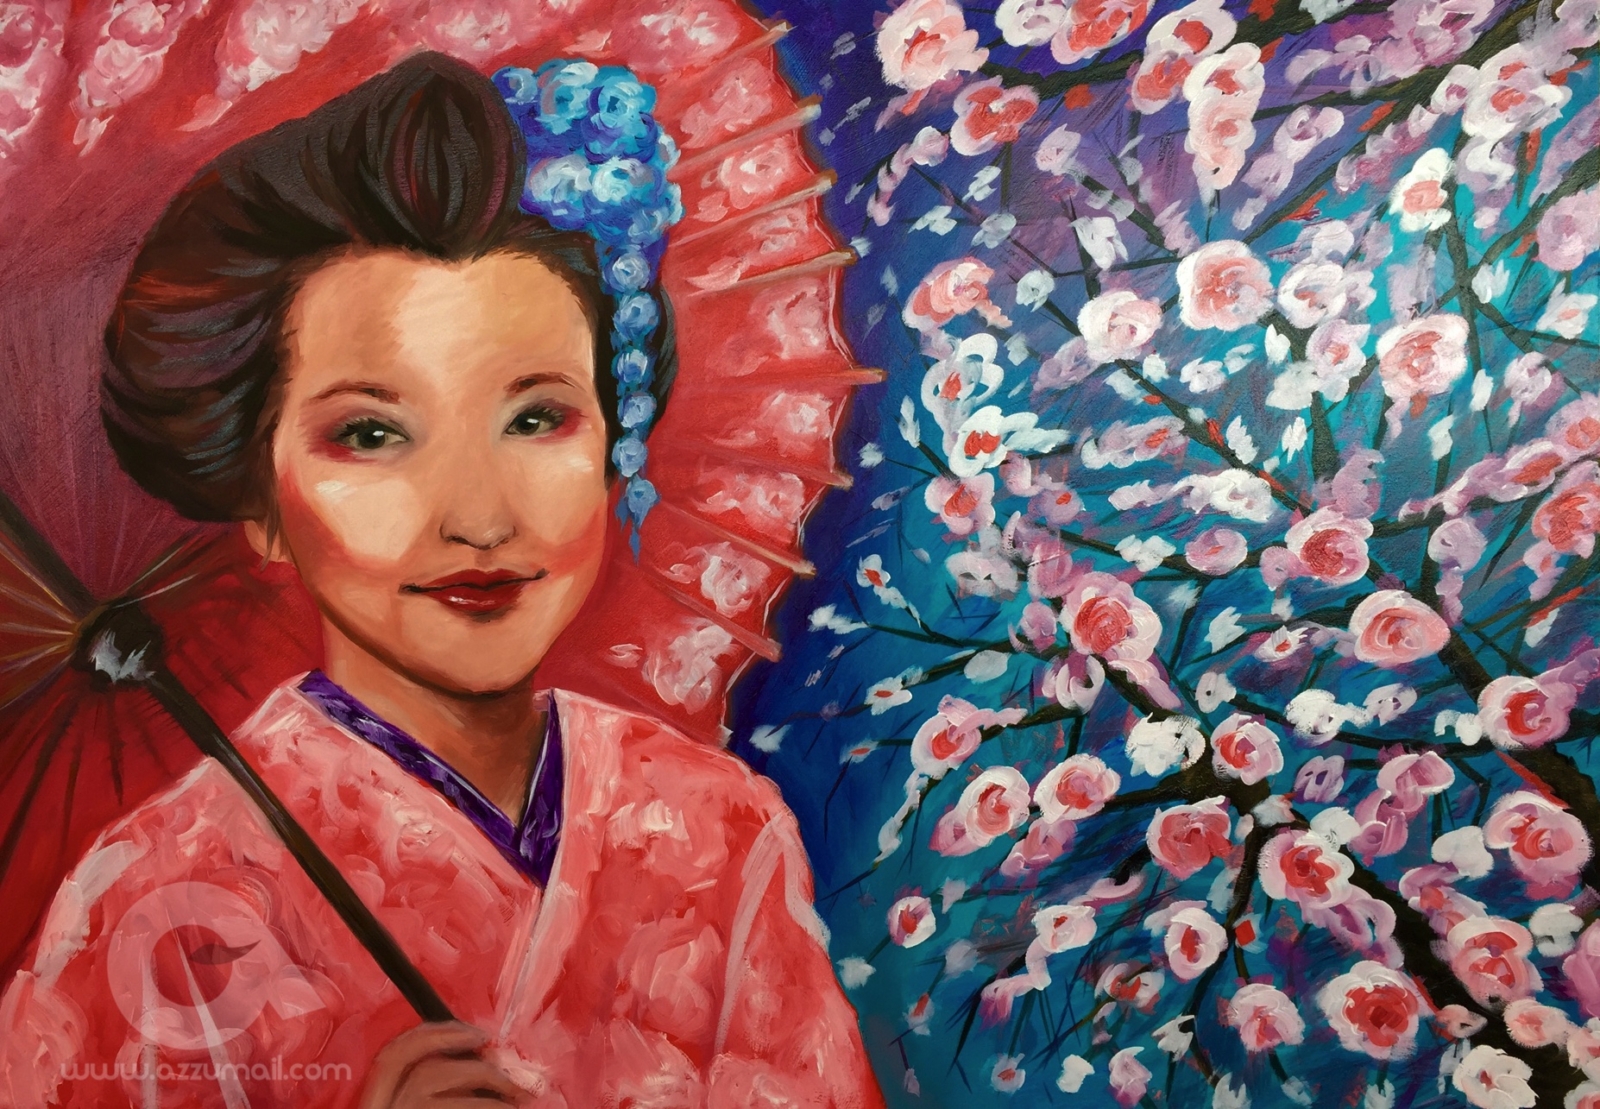 Quadro di geisha giapponese